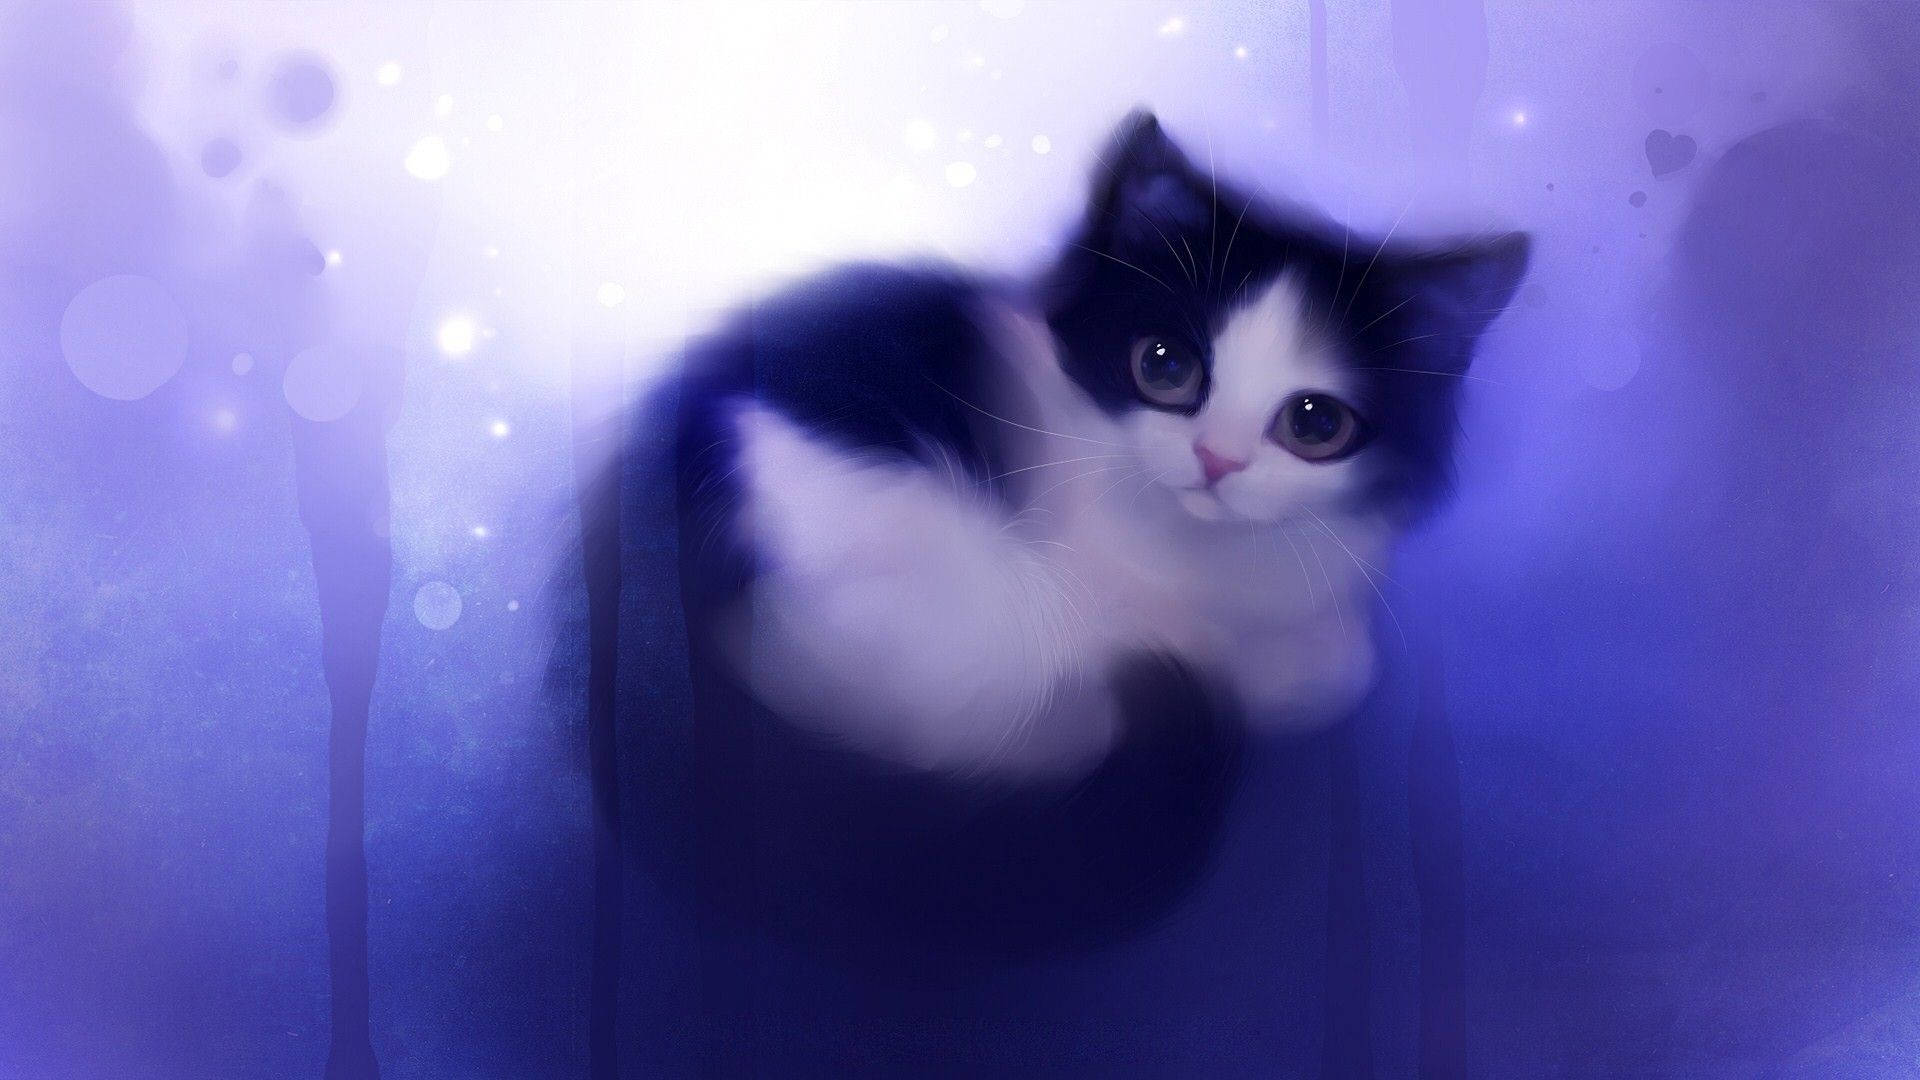 Free Cute Kawaii Cat Wallpaper Downloads, Cute Kawaii Cat Wallpaper for FREE